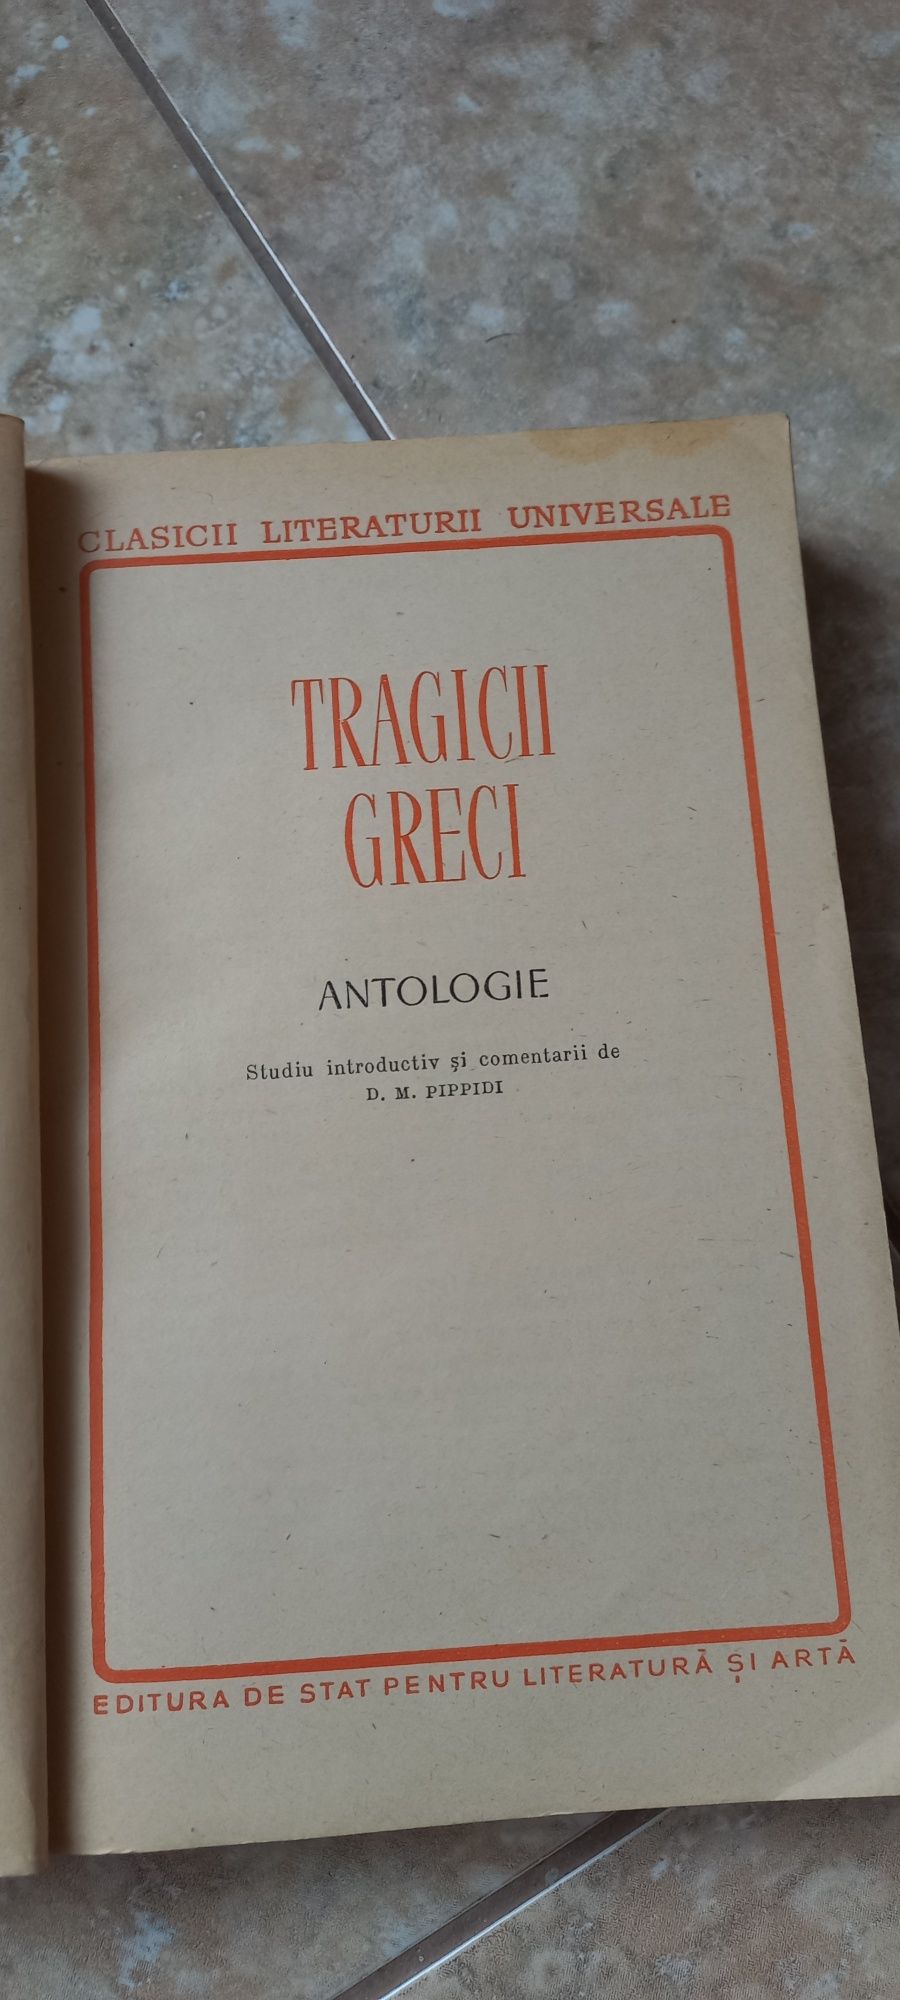 Tragicii greci editie 1958